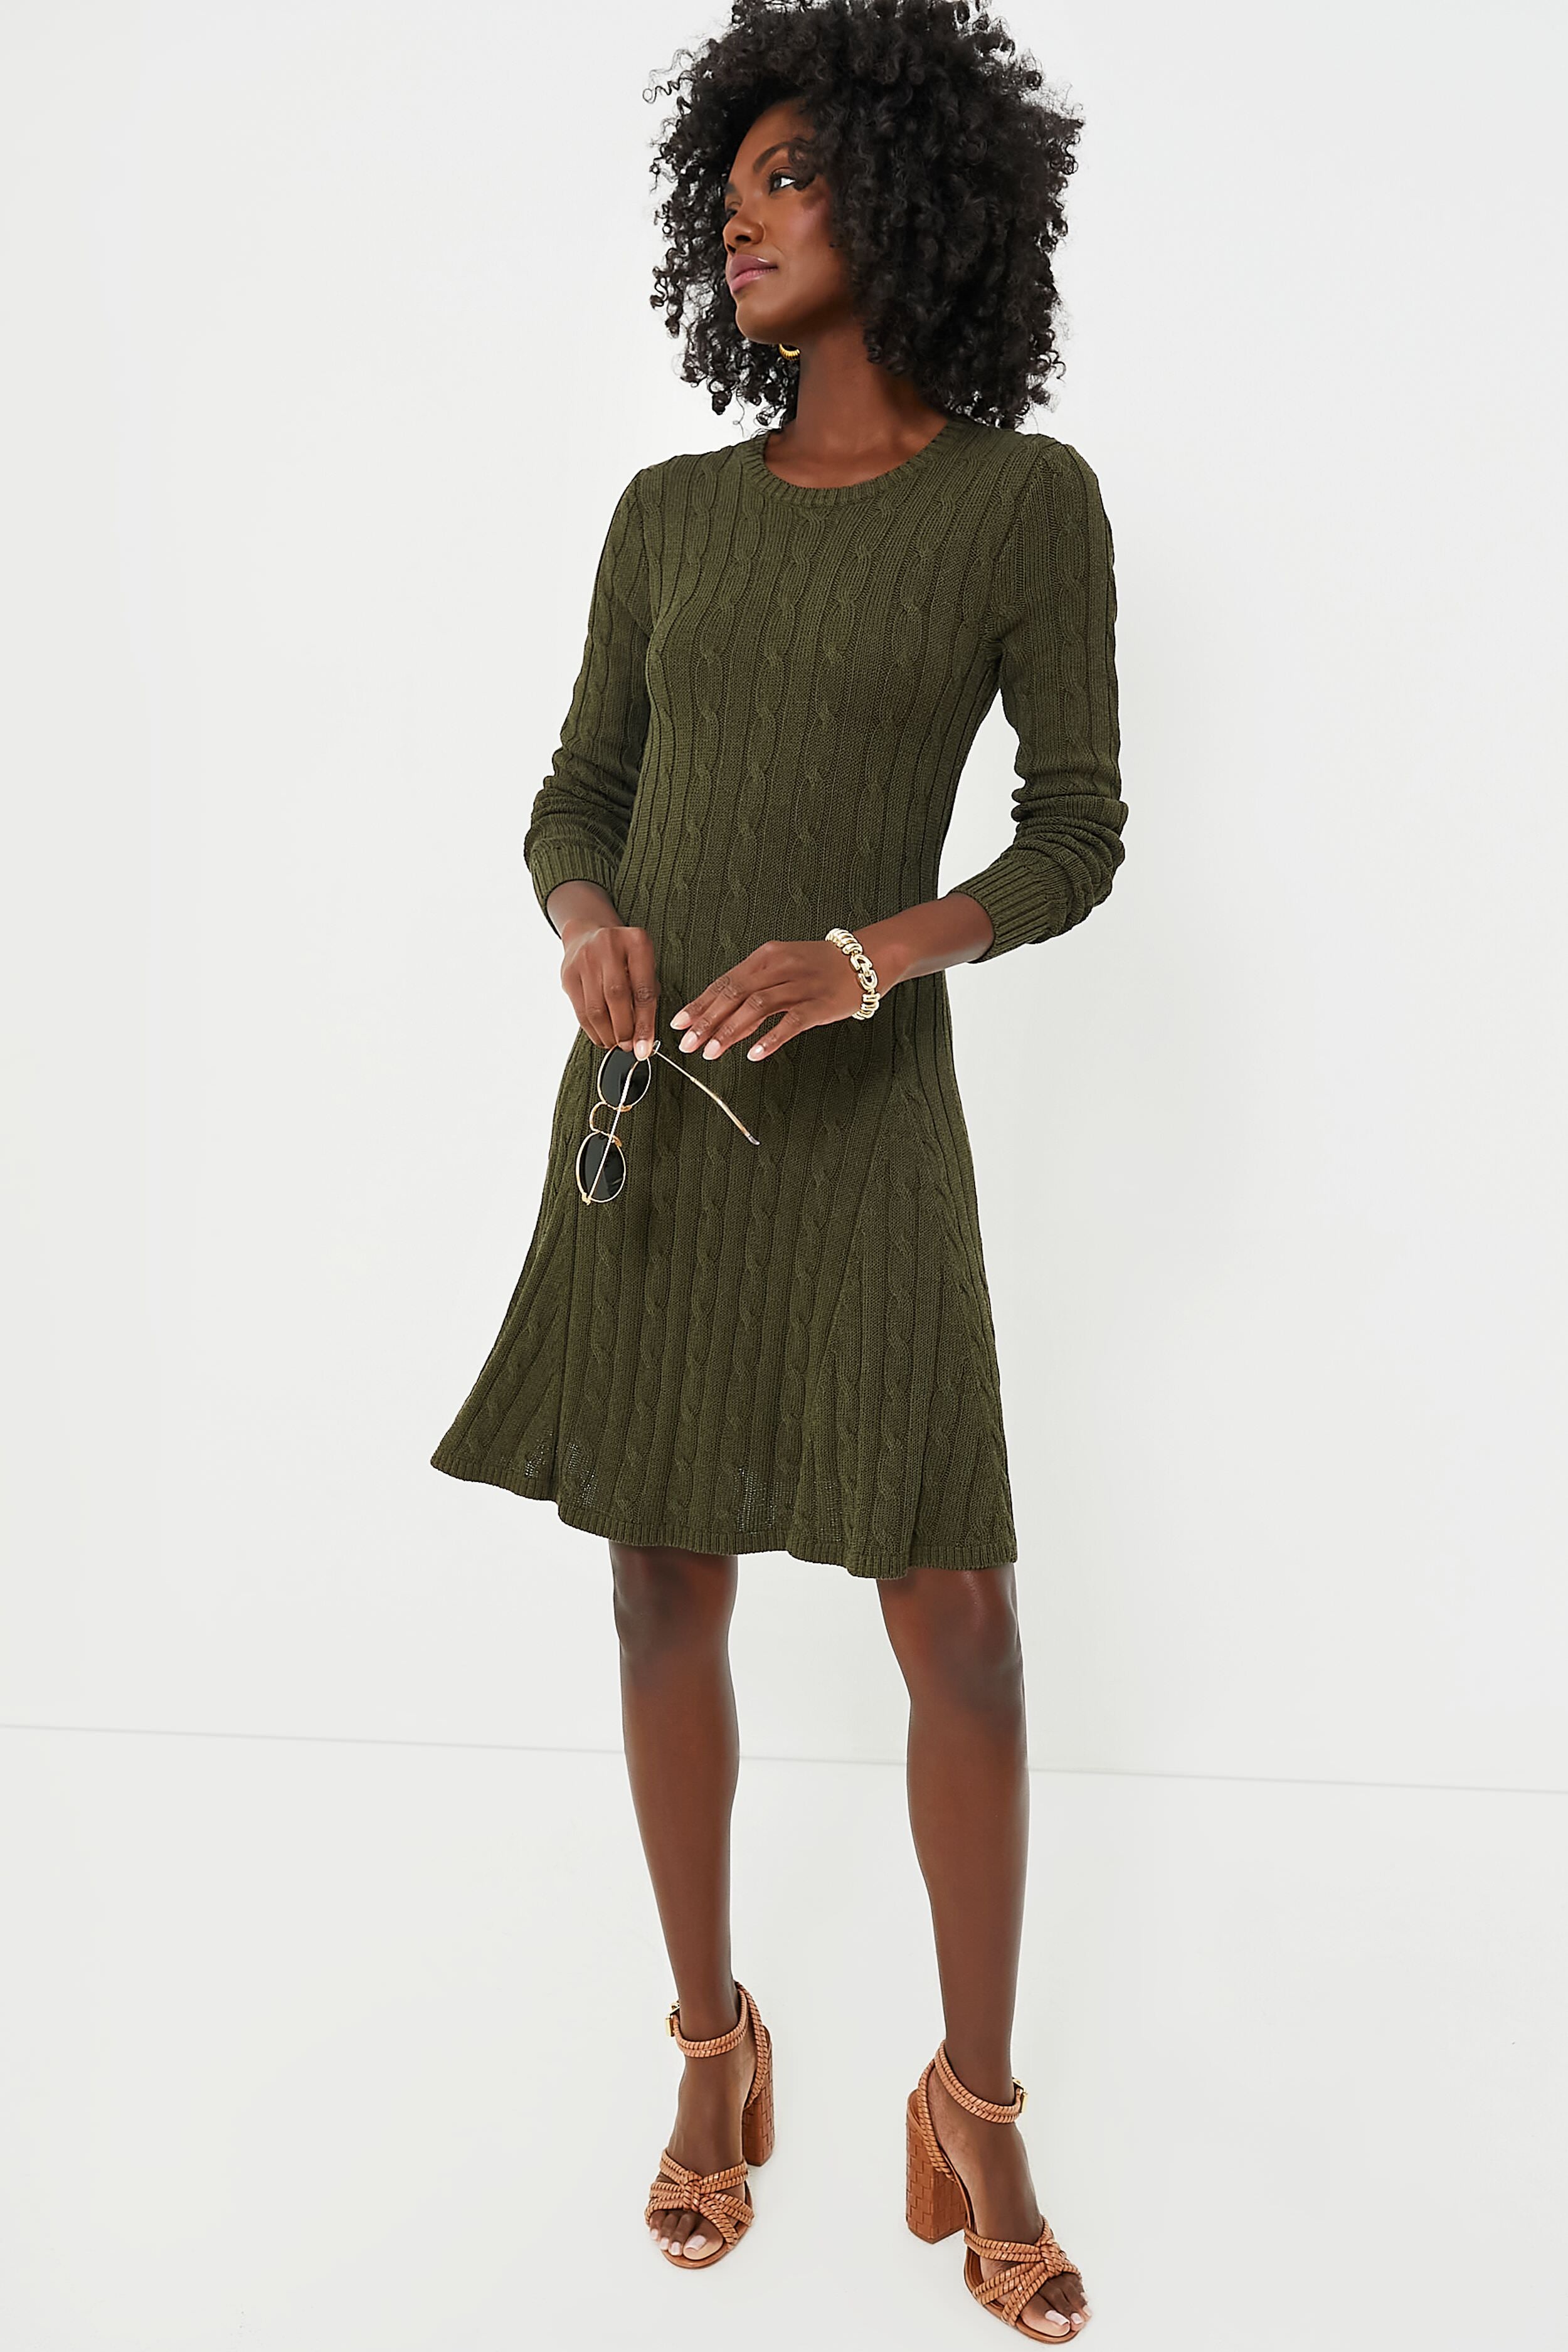 Canopy Olive Viscose Cotton Blend Long Sleeve Dress | Polo Ralph Lauren